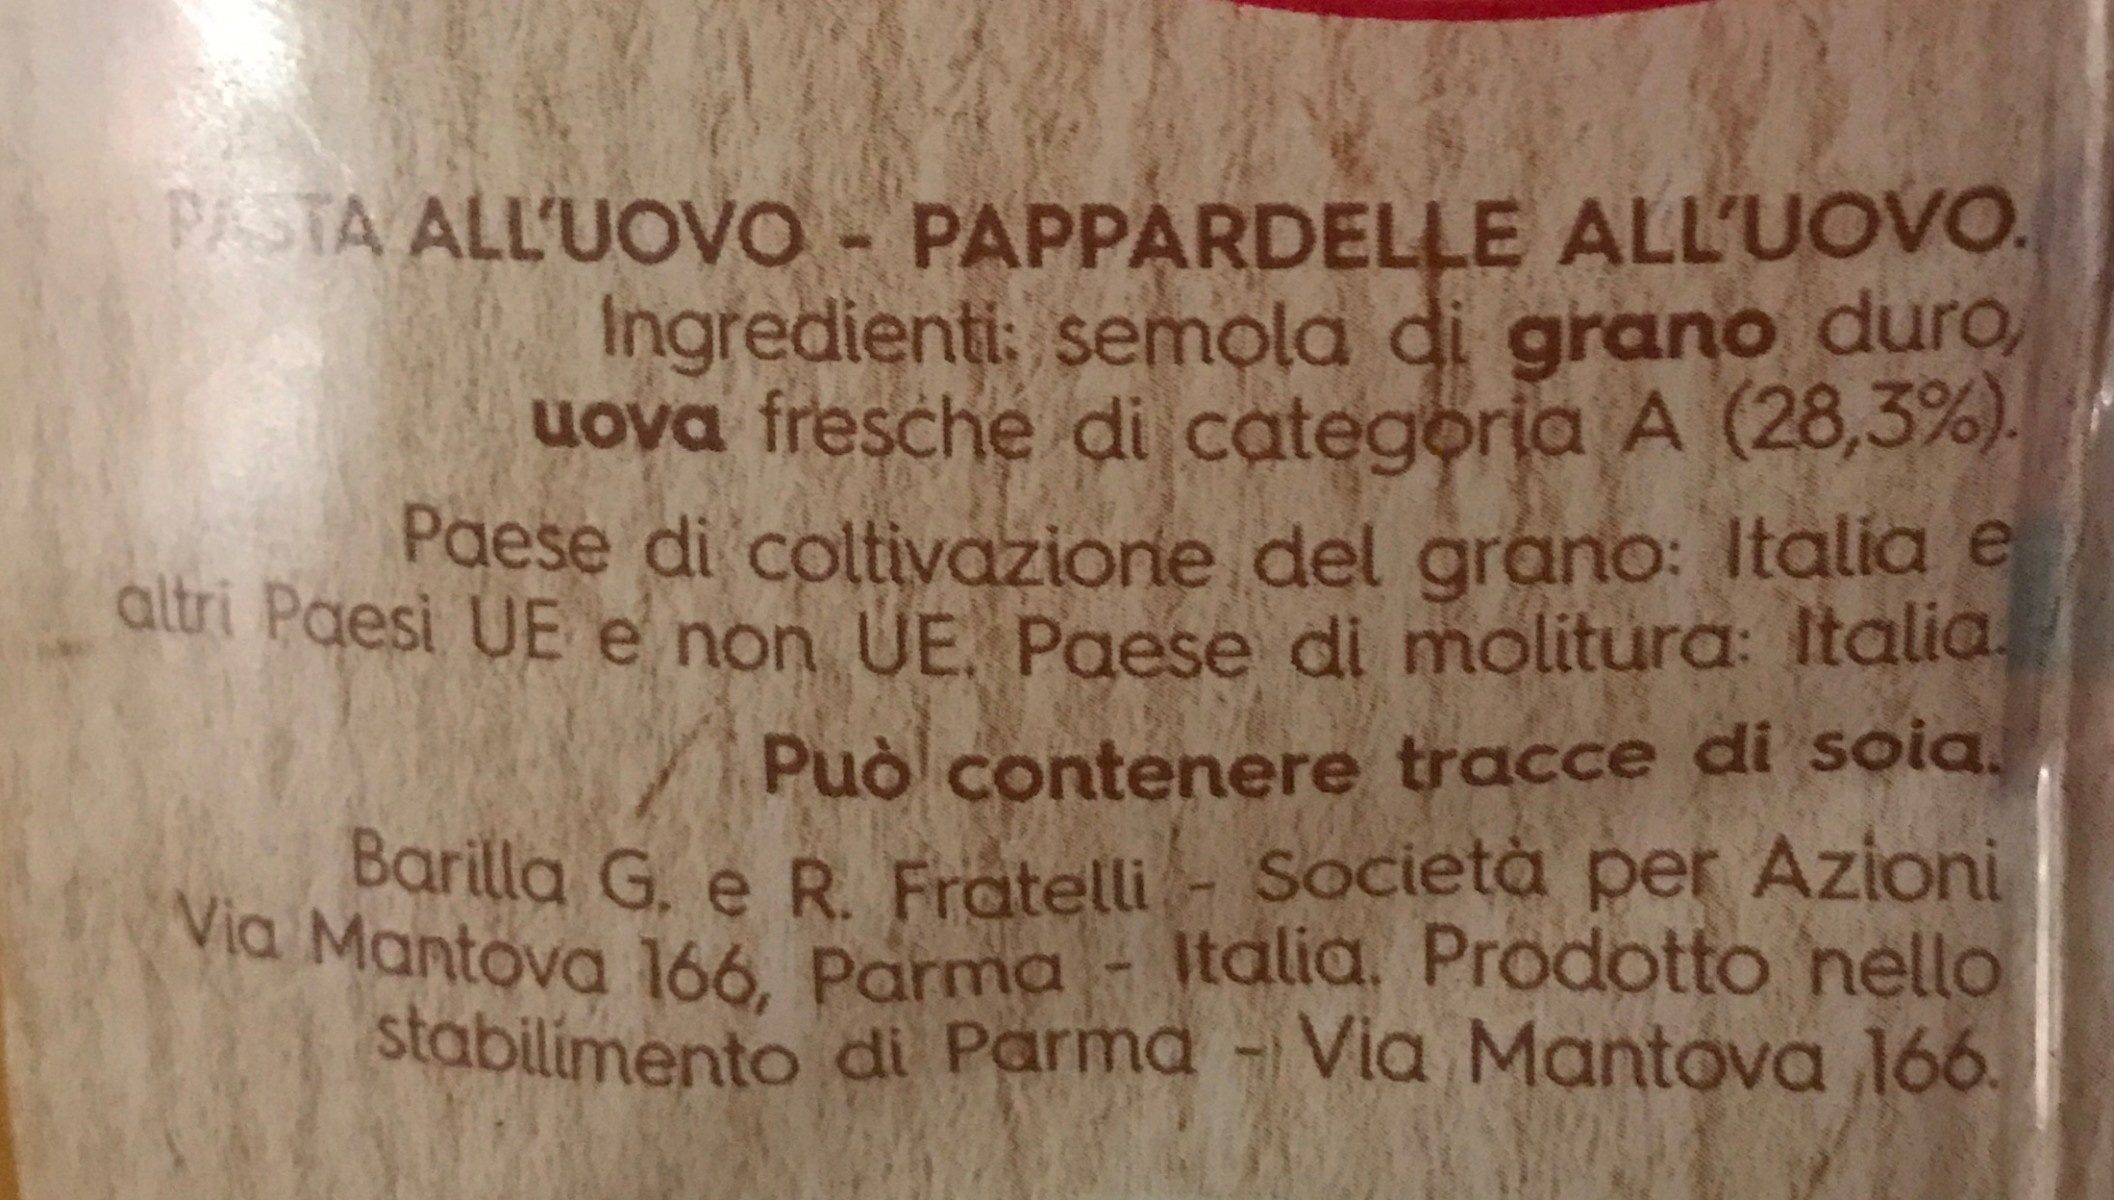 Barilla collezione Pappardelle All'uovo 250g - Ingredients - fr